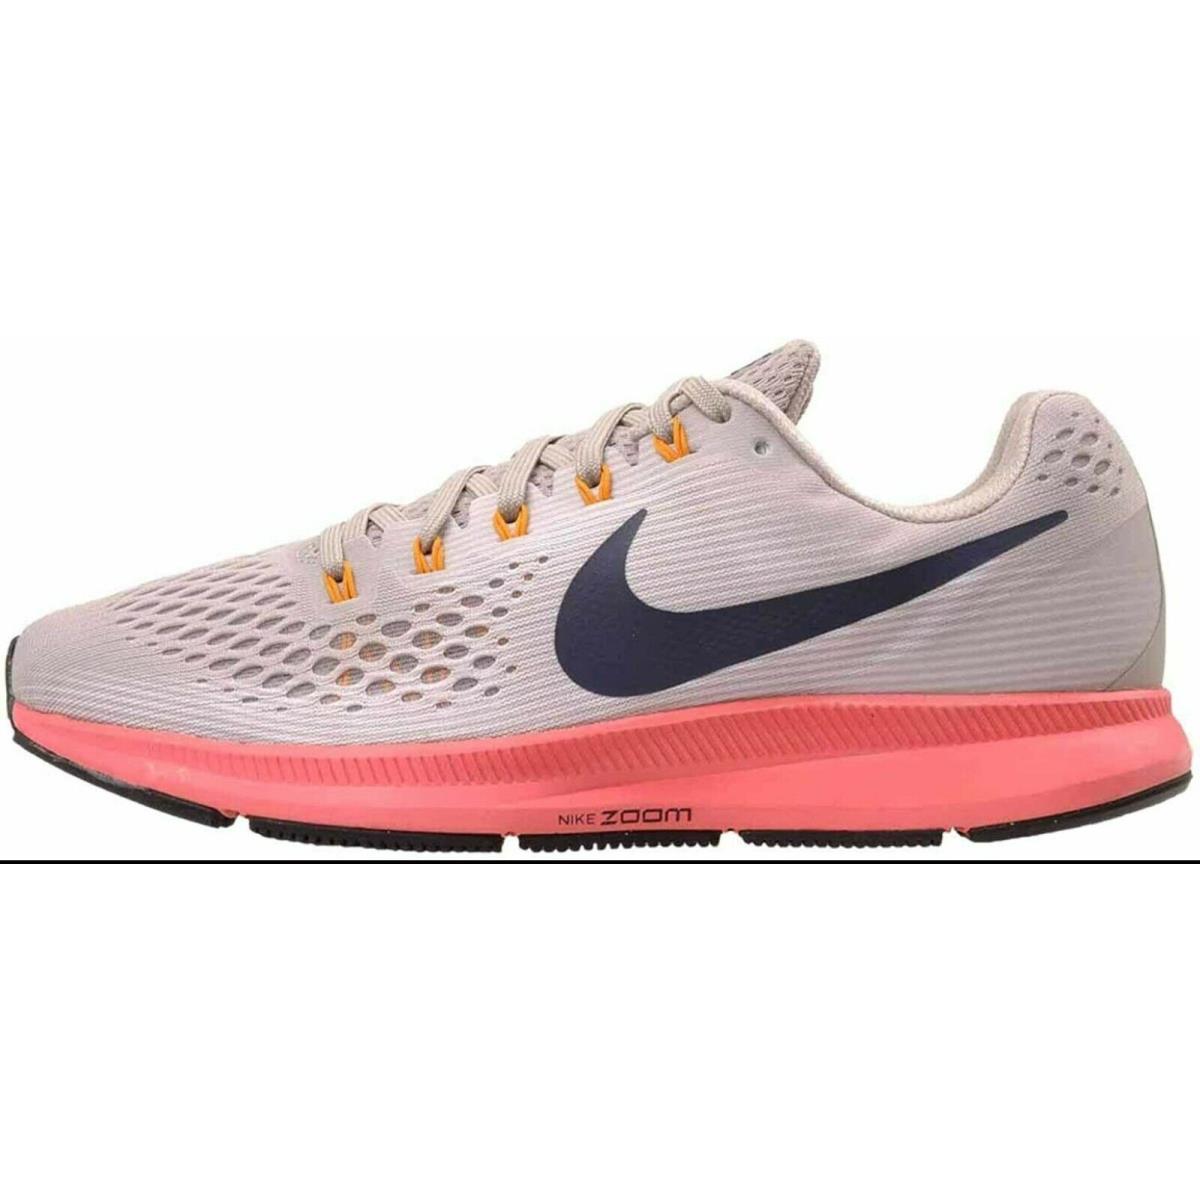 Size 10.5 Nike Mens Air Zoompegasus 34Gray Pink Running Sneakers Shoes880555 200 - Pink